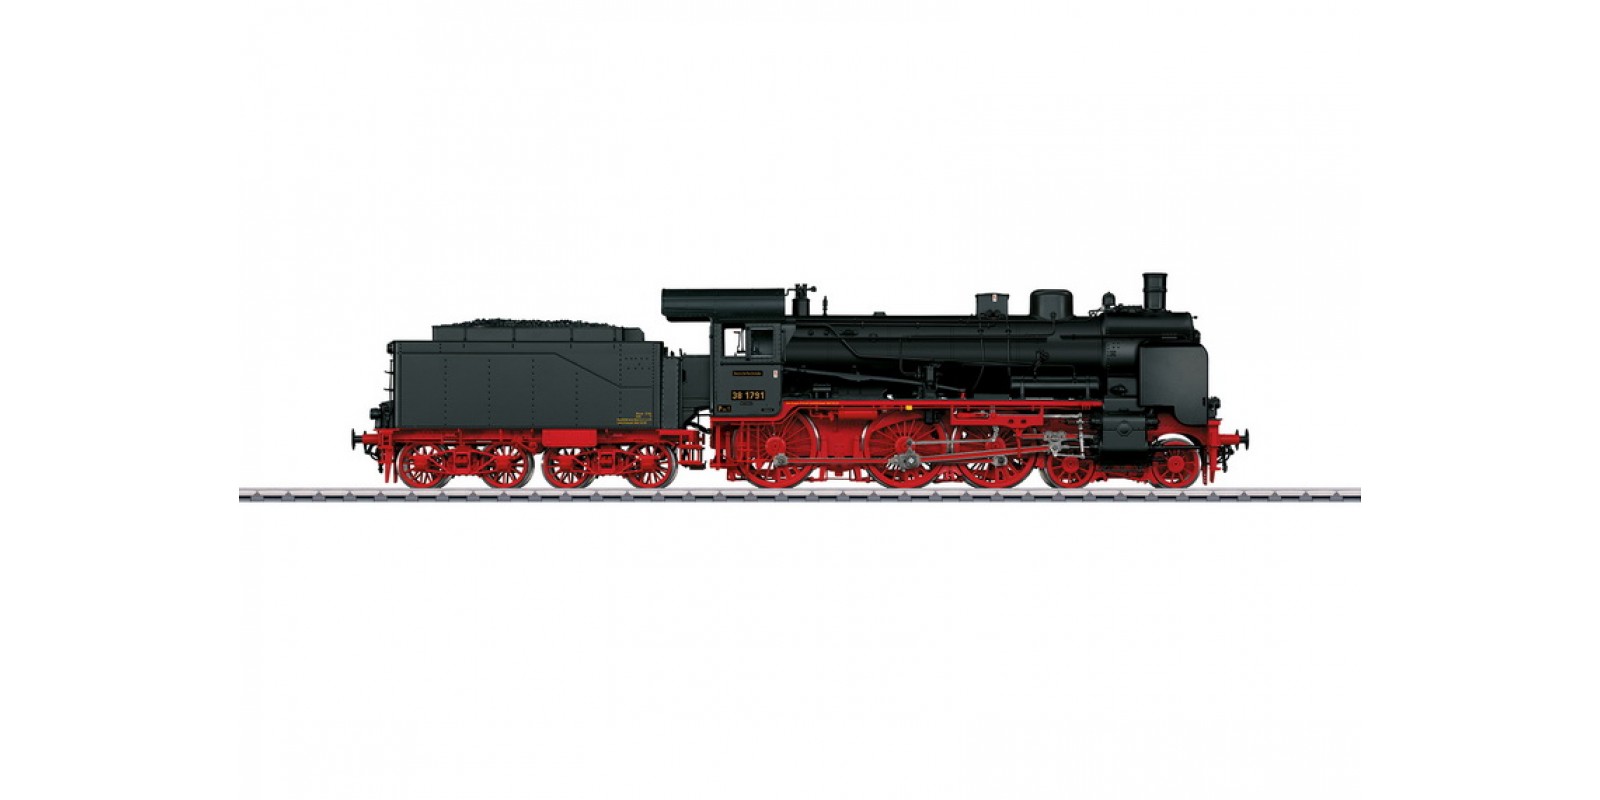 55382 Class 38.10-40 Steam Locomotive